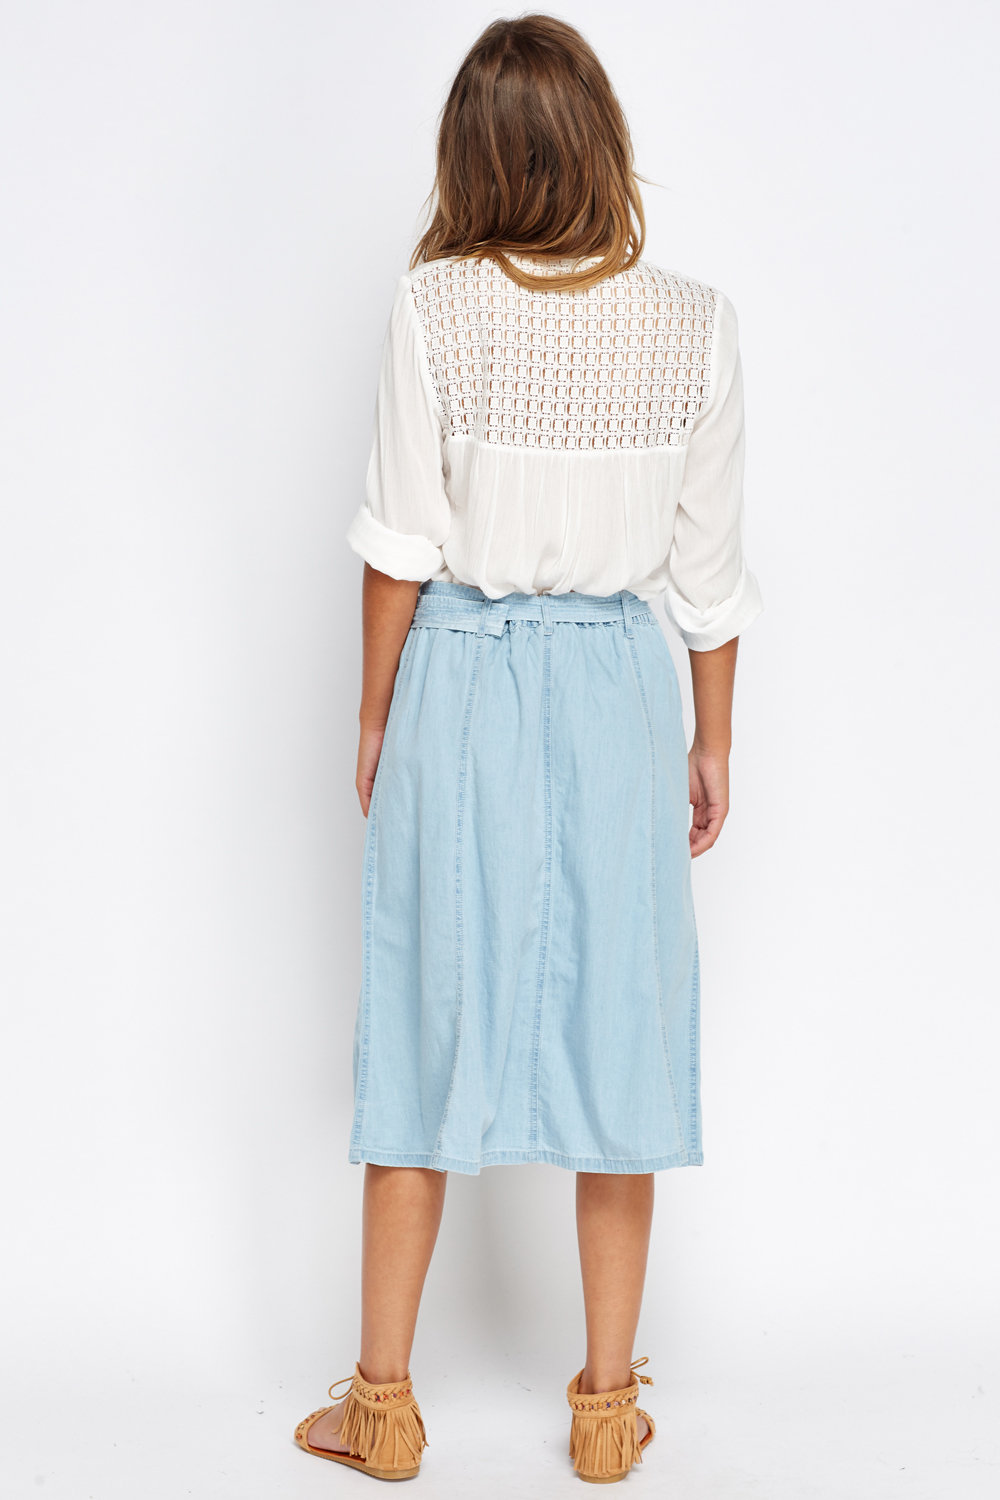 Blue Denim Look Midi Skirt - Just $6